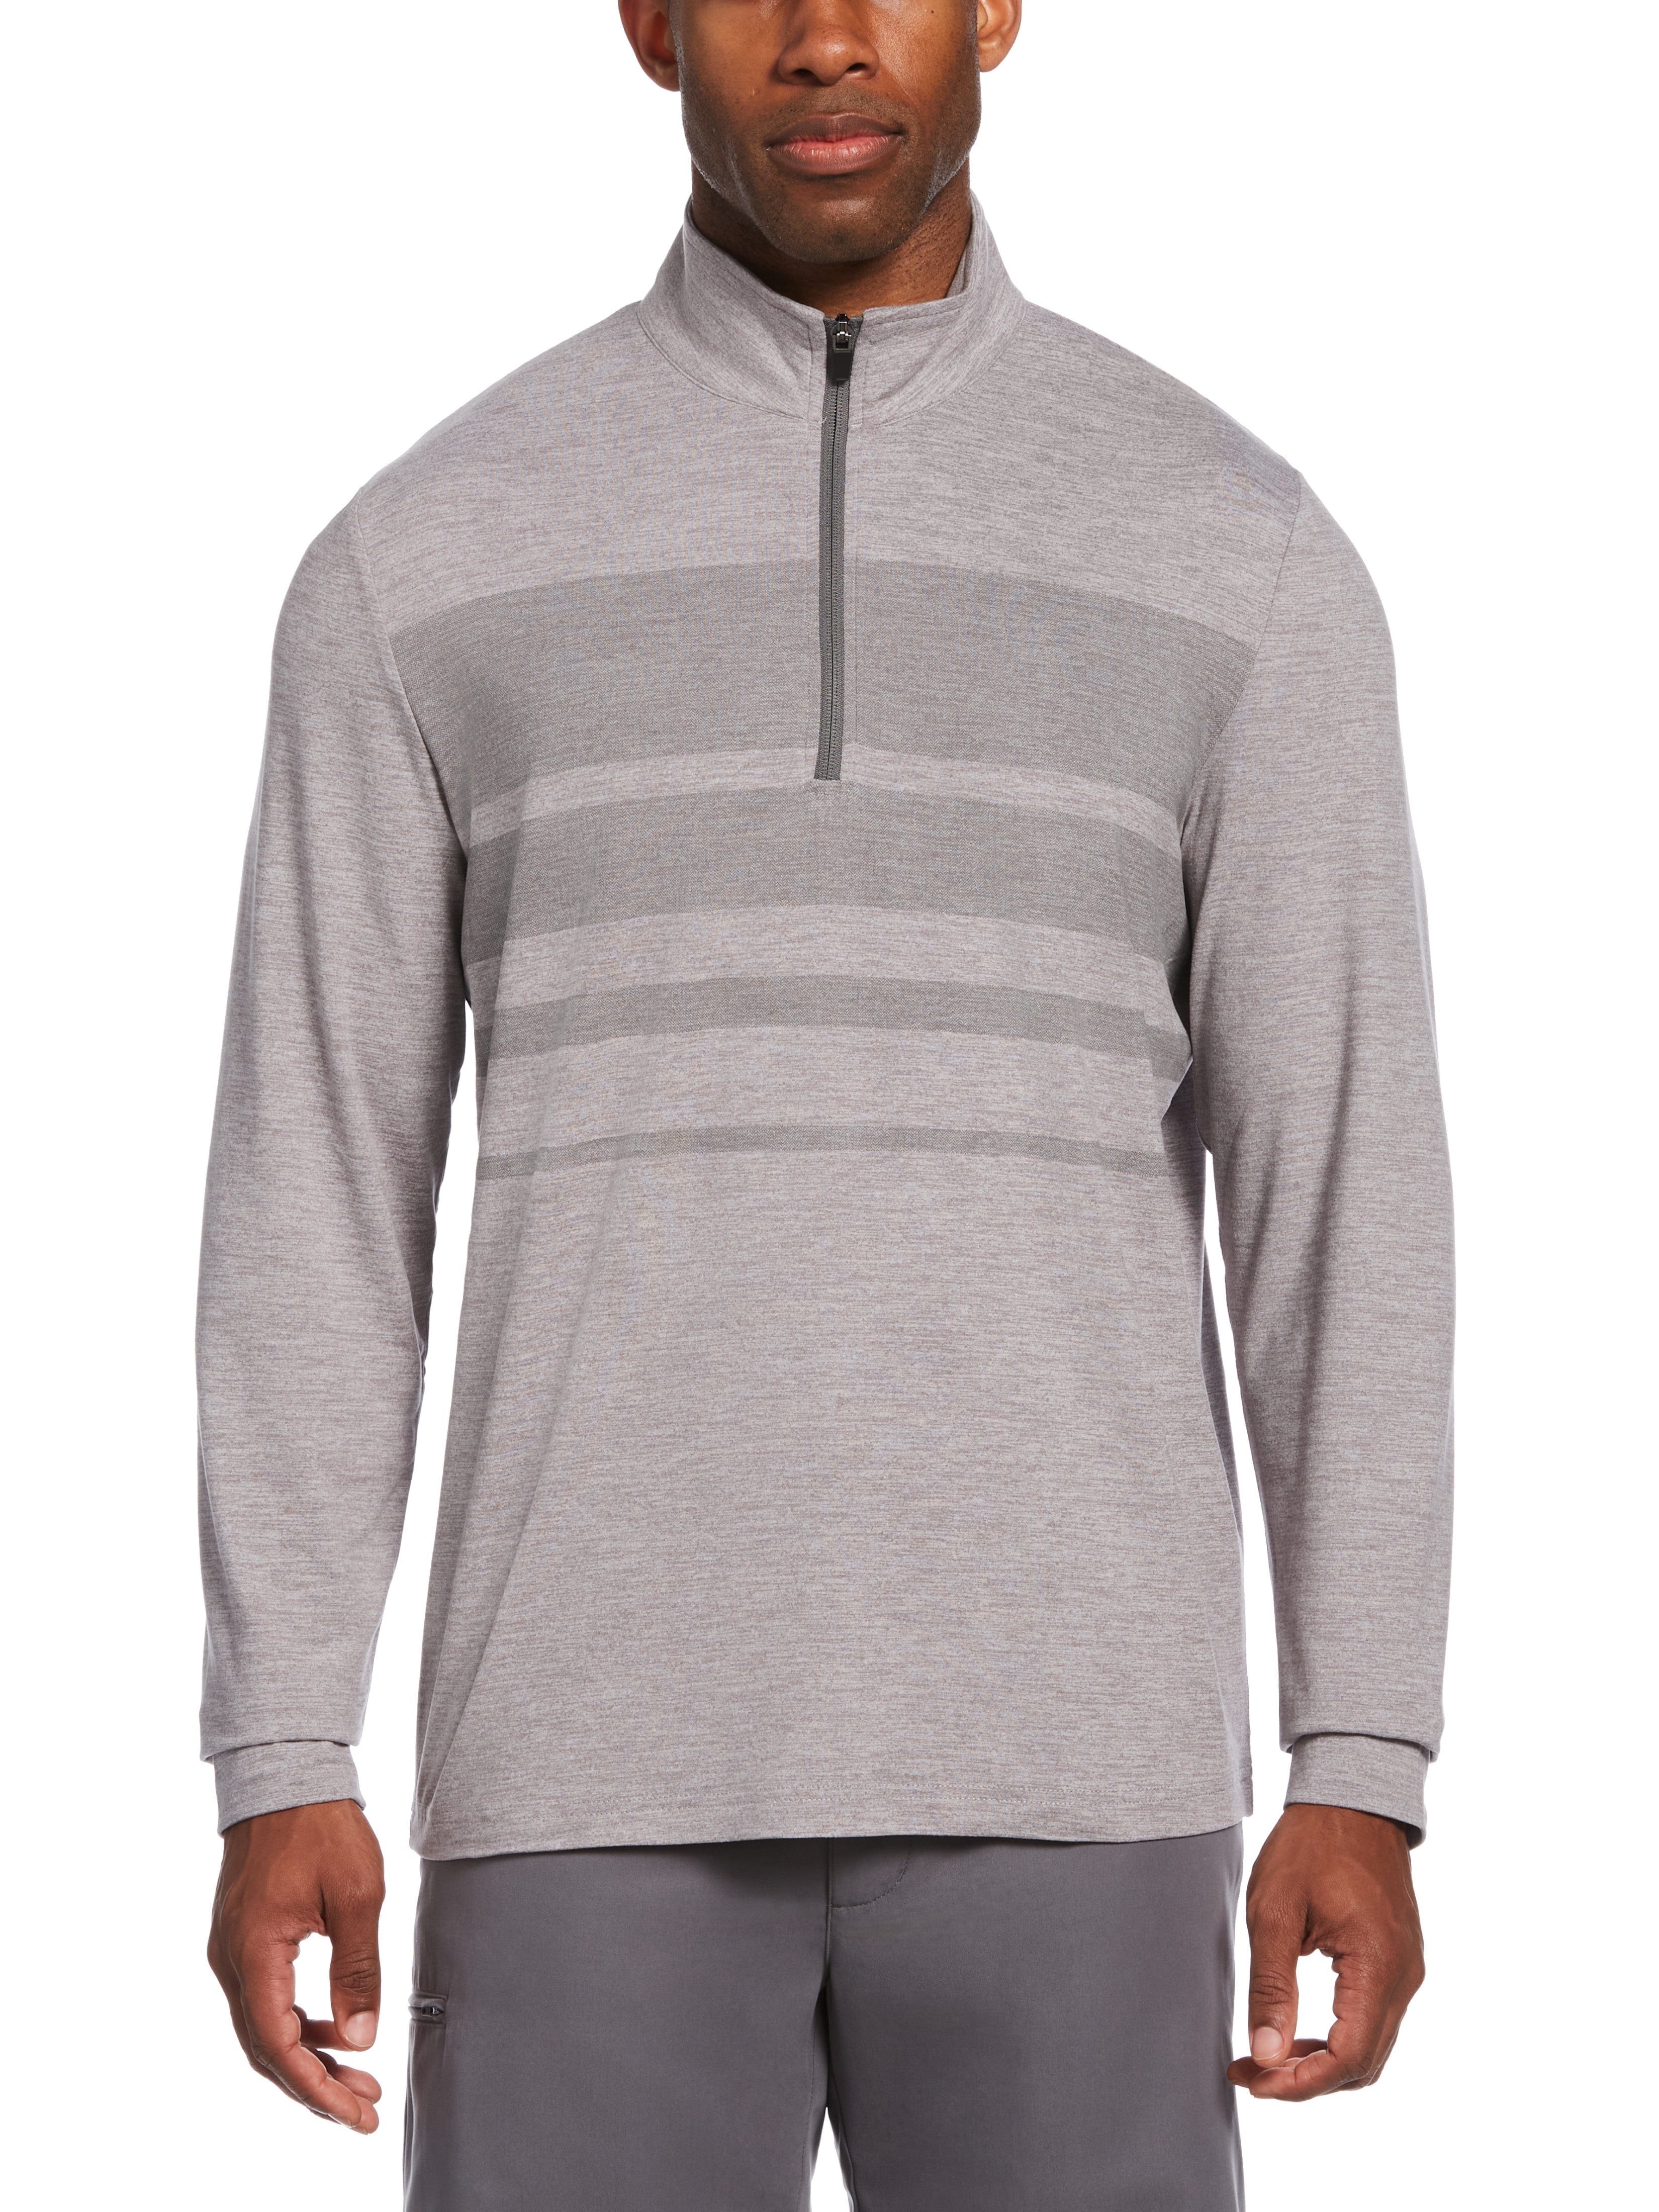 Haimont Men's 1/4 Zip Golf Shirt Athletic Pullover